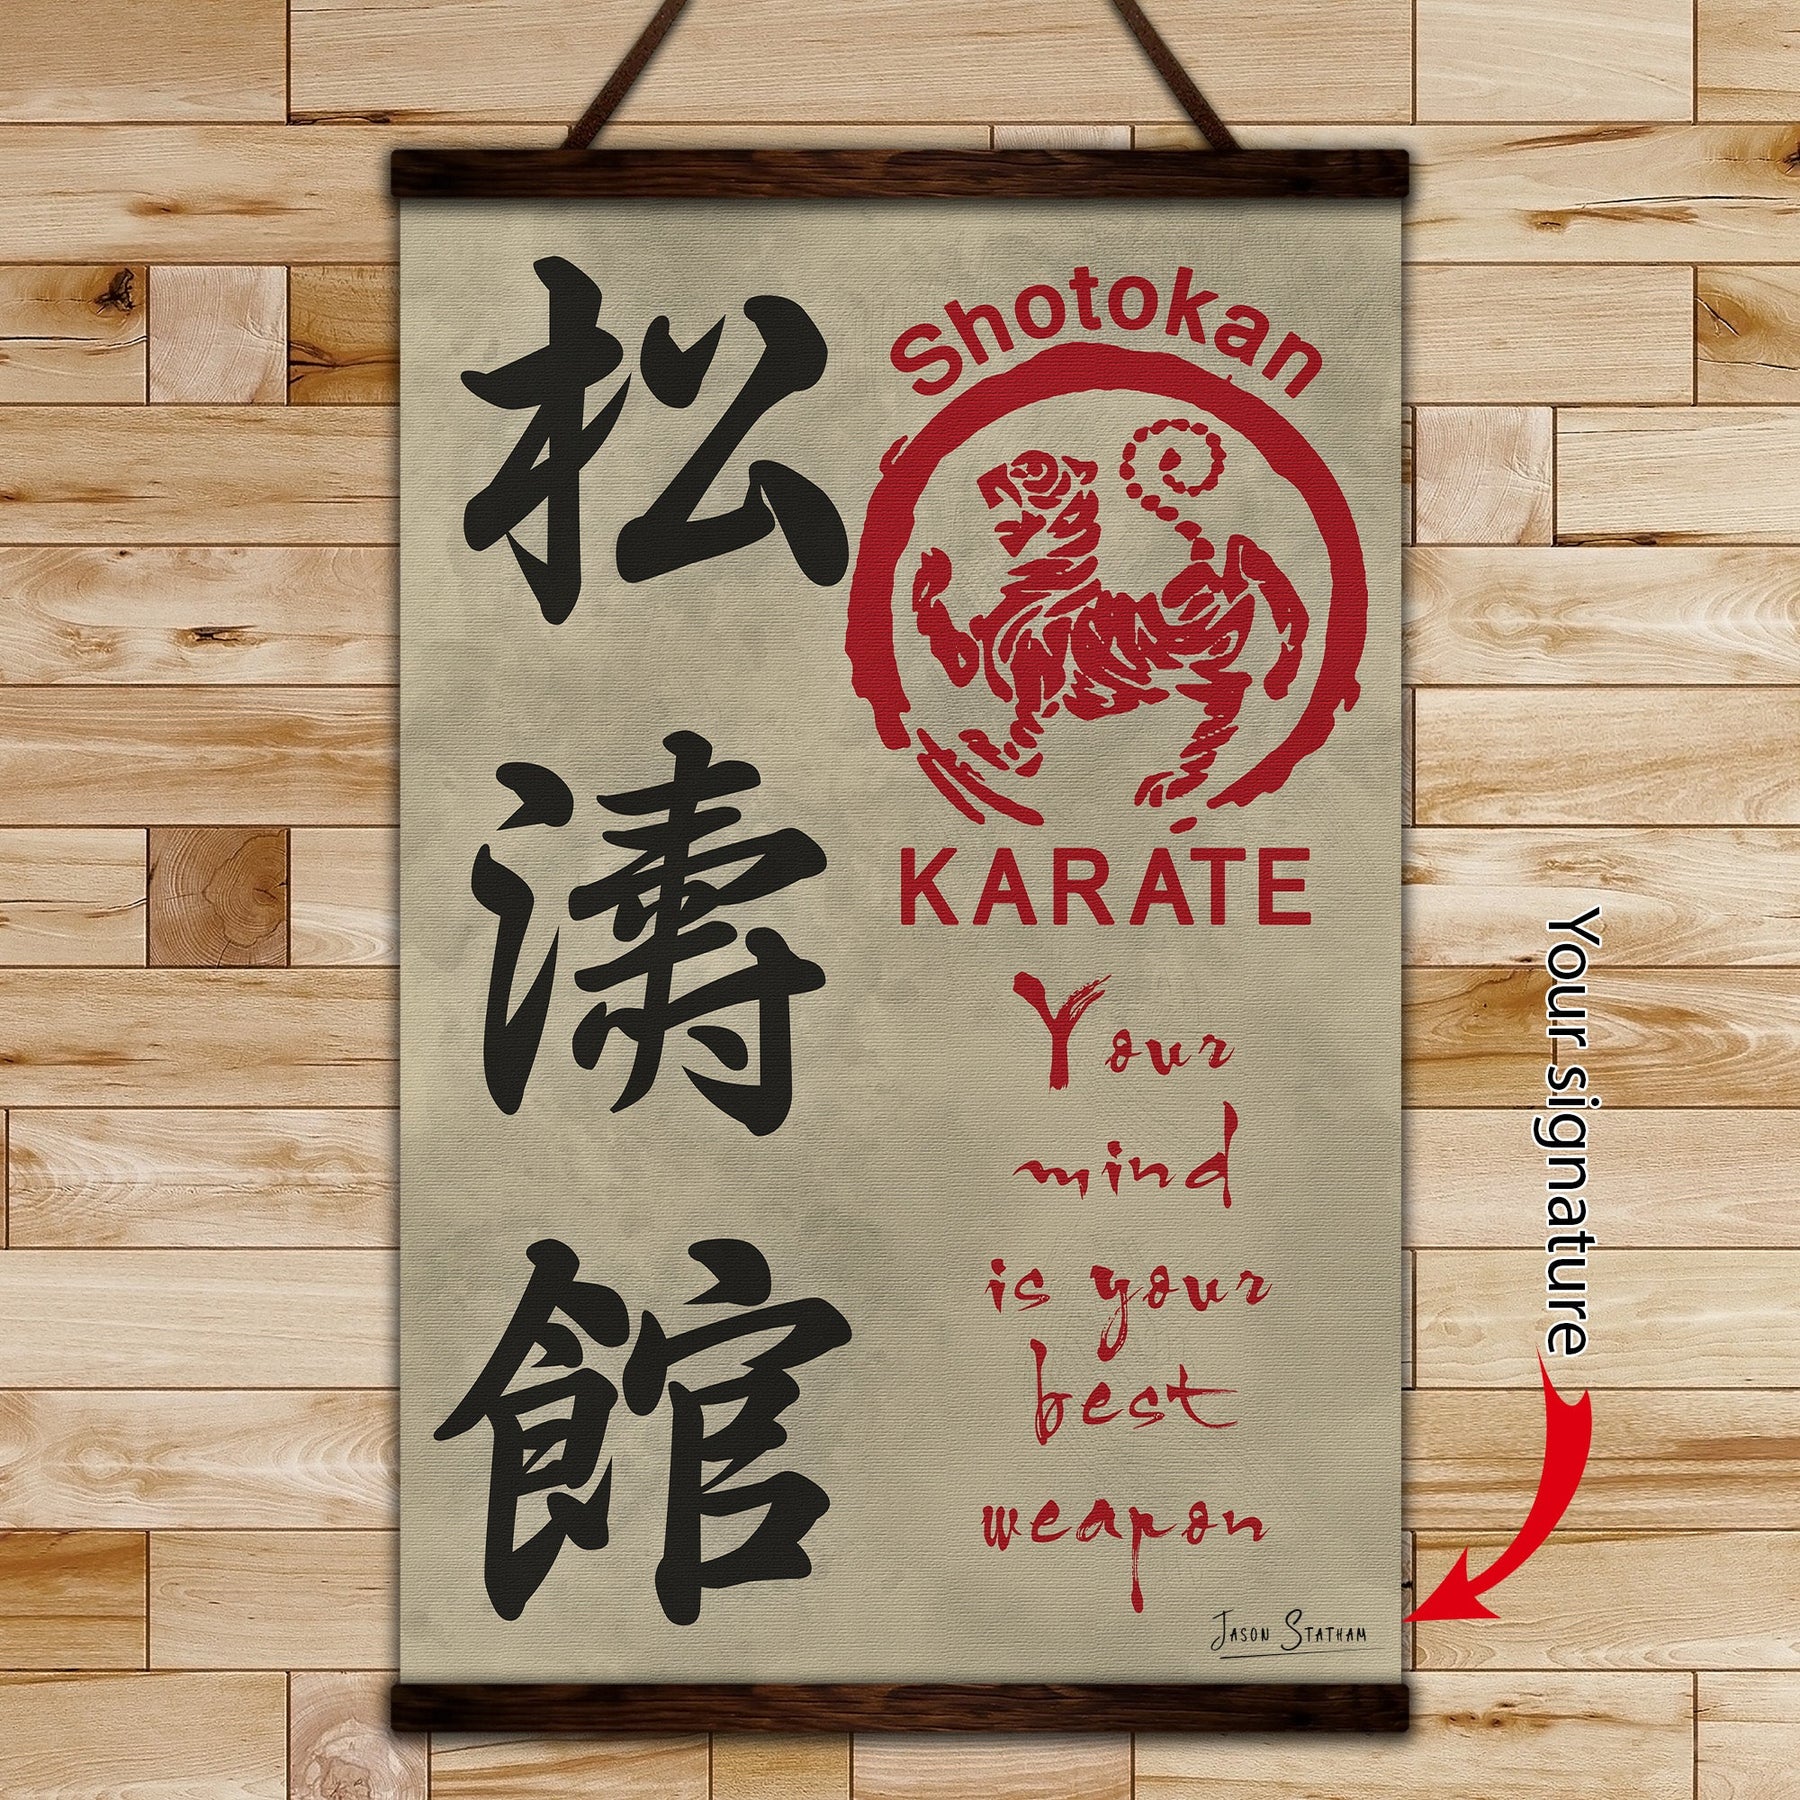 KA027 - Your Mind Is Your Best Weapon - Shotokan Karate - Vertical Poster - Vertical Canvas - Karate Poster - Karate Canvas